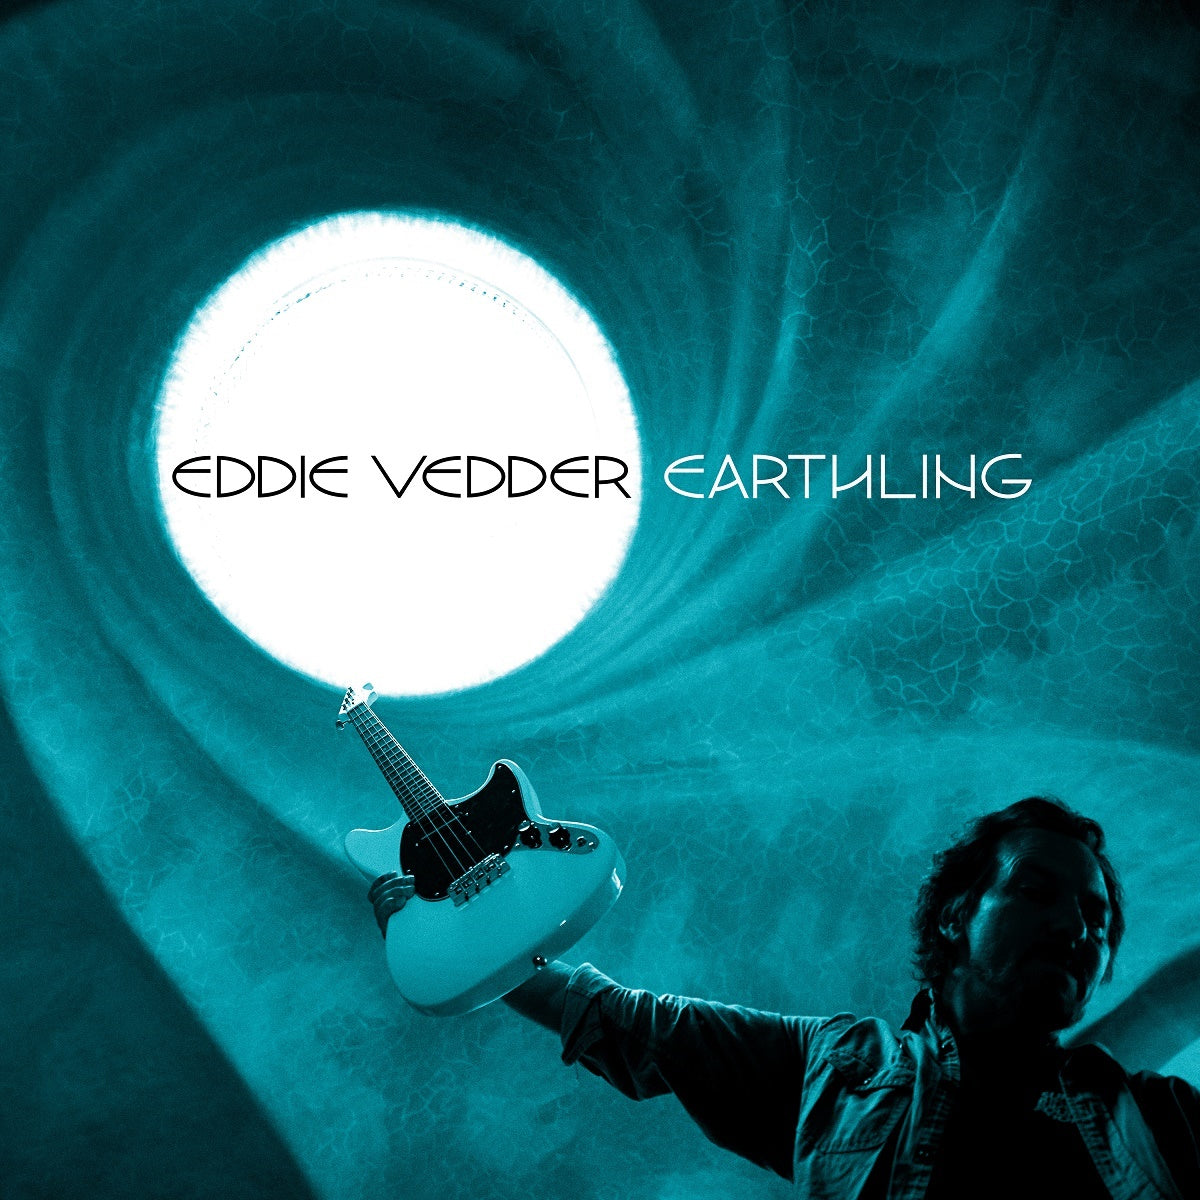 Earthling [Explicit Content] Clear Vinyl, Blue, Black, Gatefold LP Jacket)